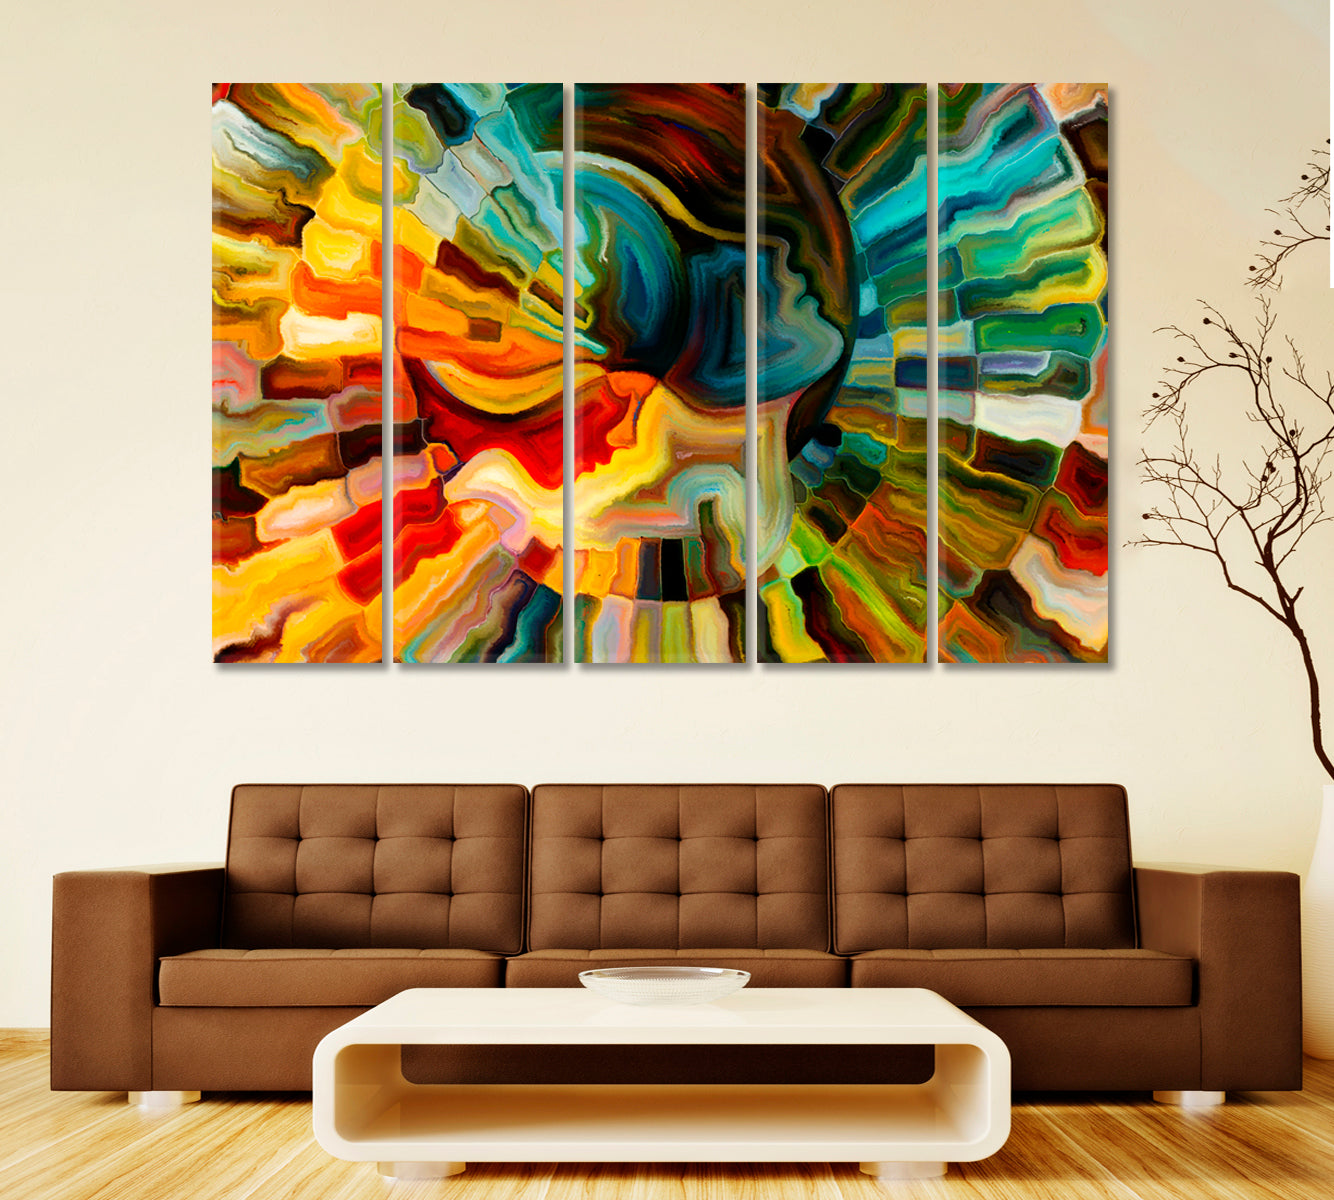 Human Emotion Colors Consciousness Art Artesty 5 panels 36" x 24" 